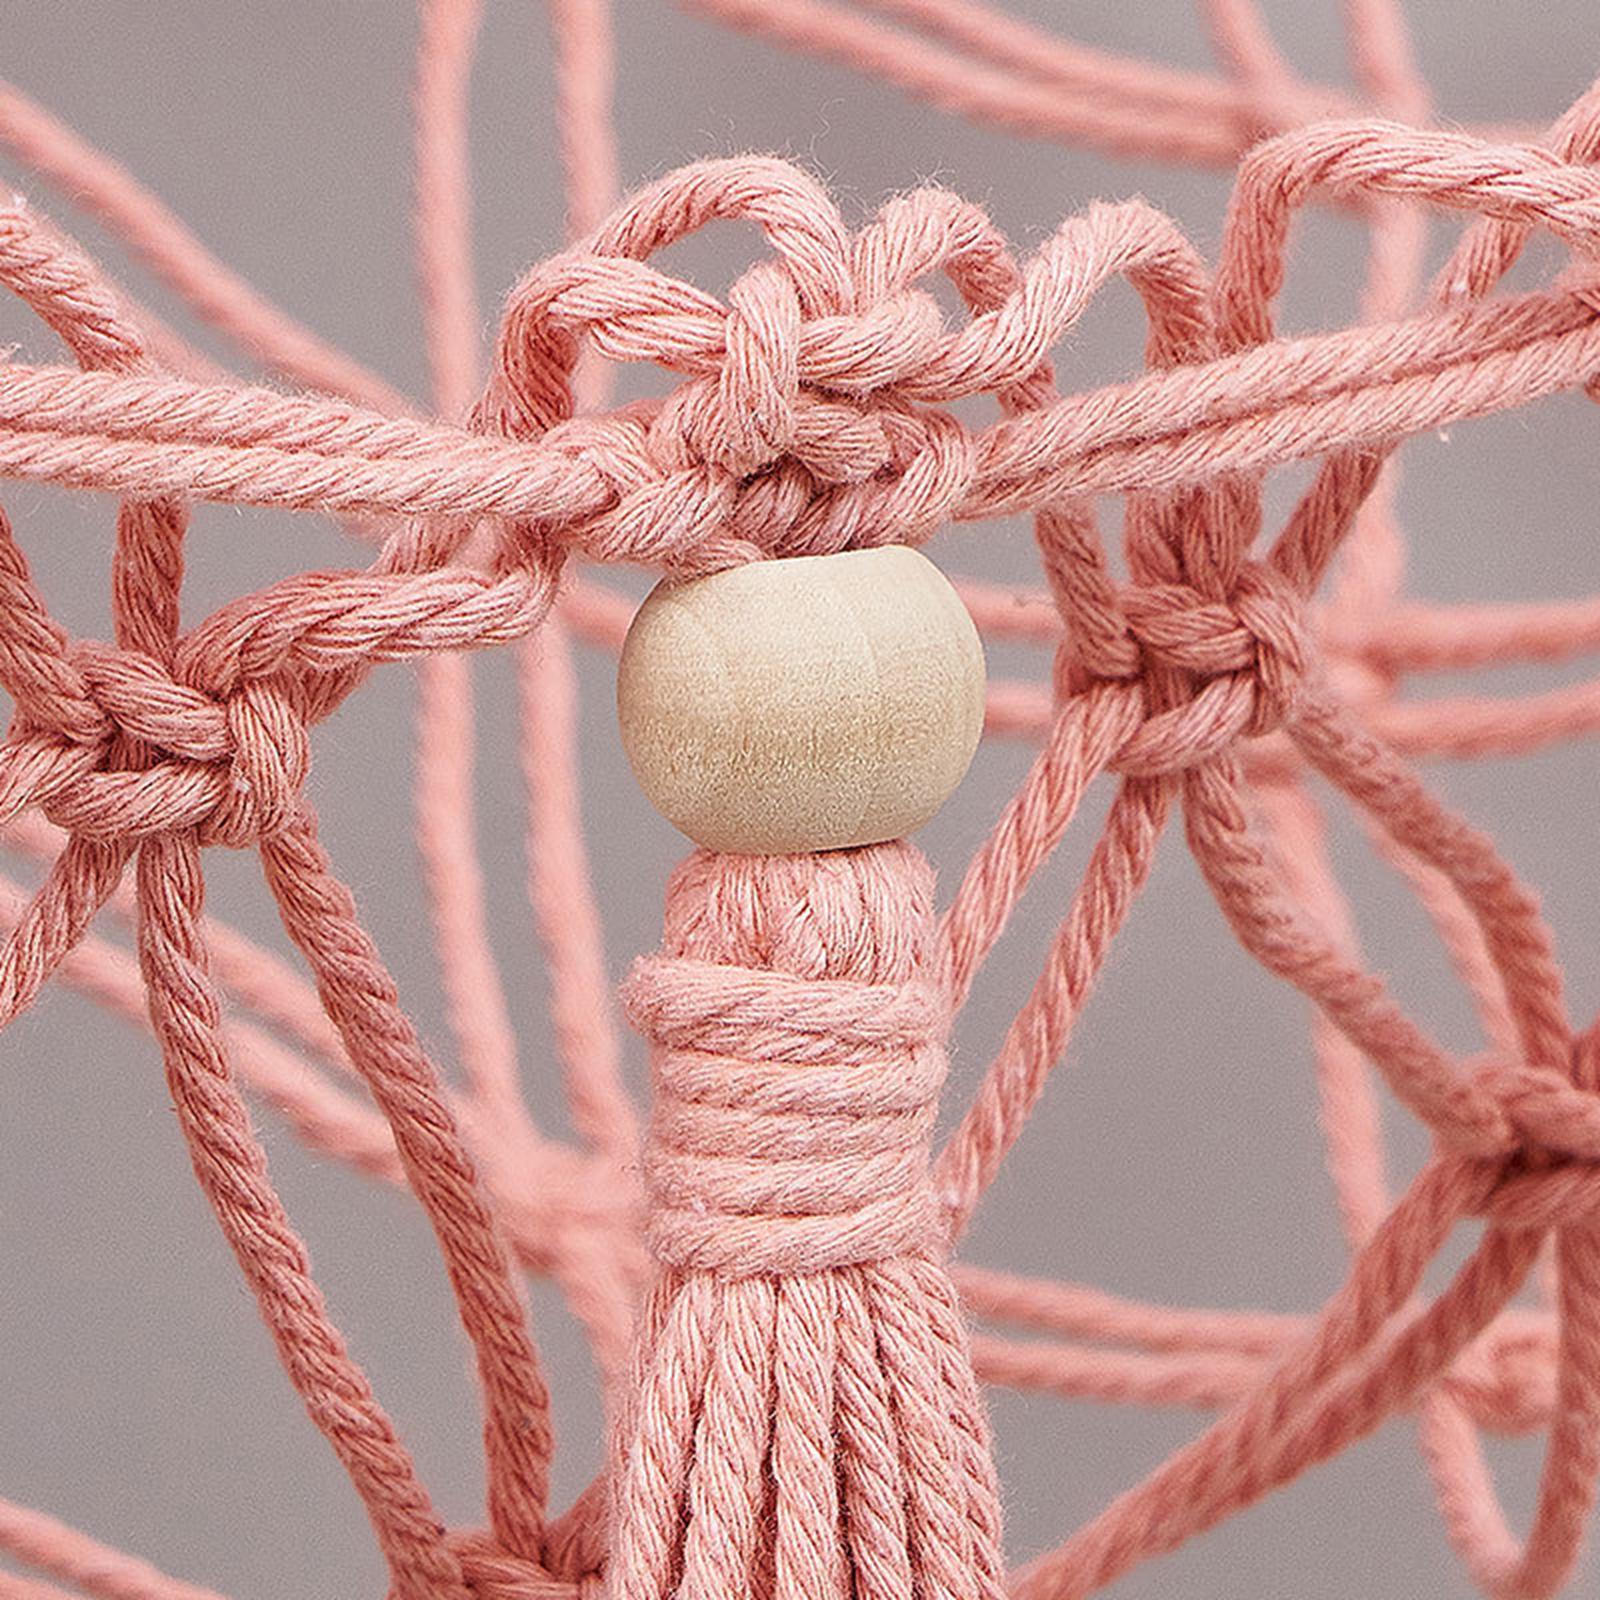 Stuffed Animal Hammock Plush Net Toy Macrame Tassel Decorative Home Display Pink